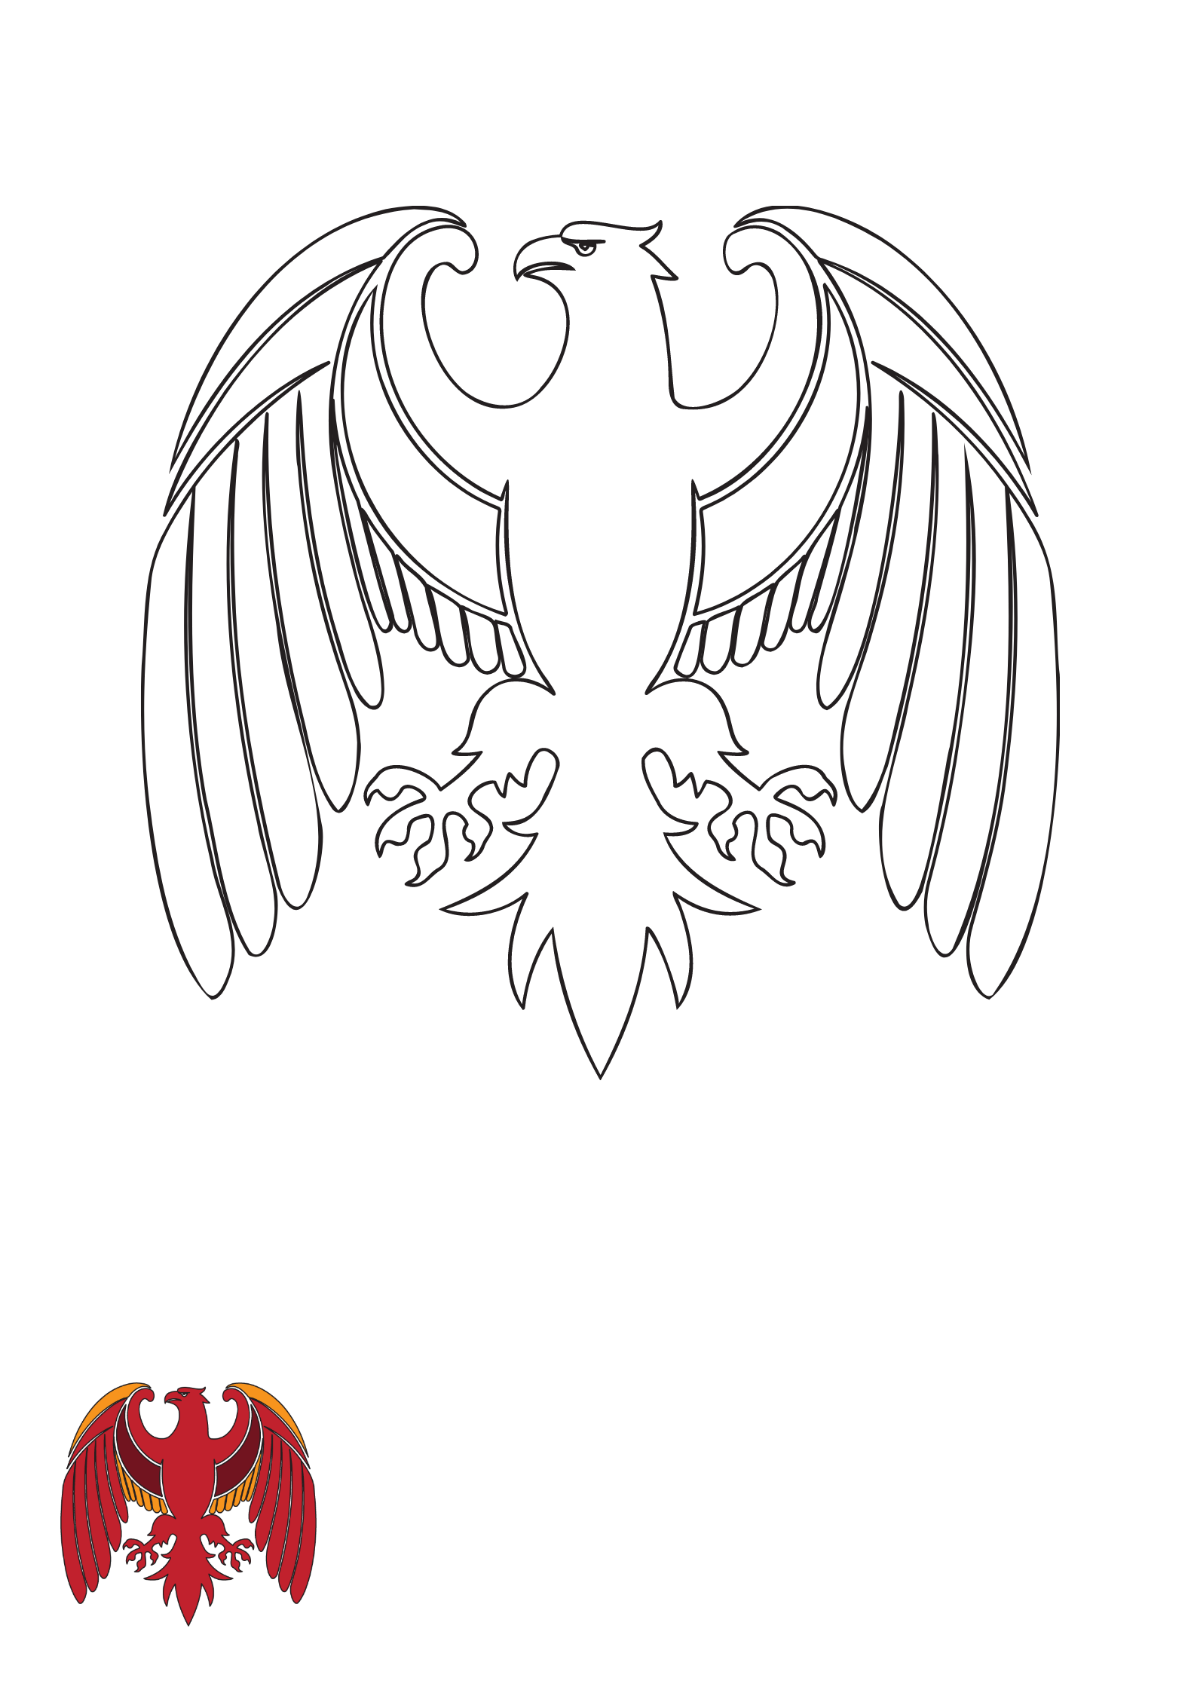 Heraldic Eagle coloring page